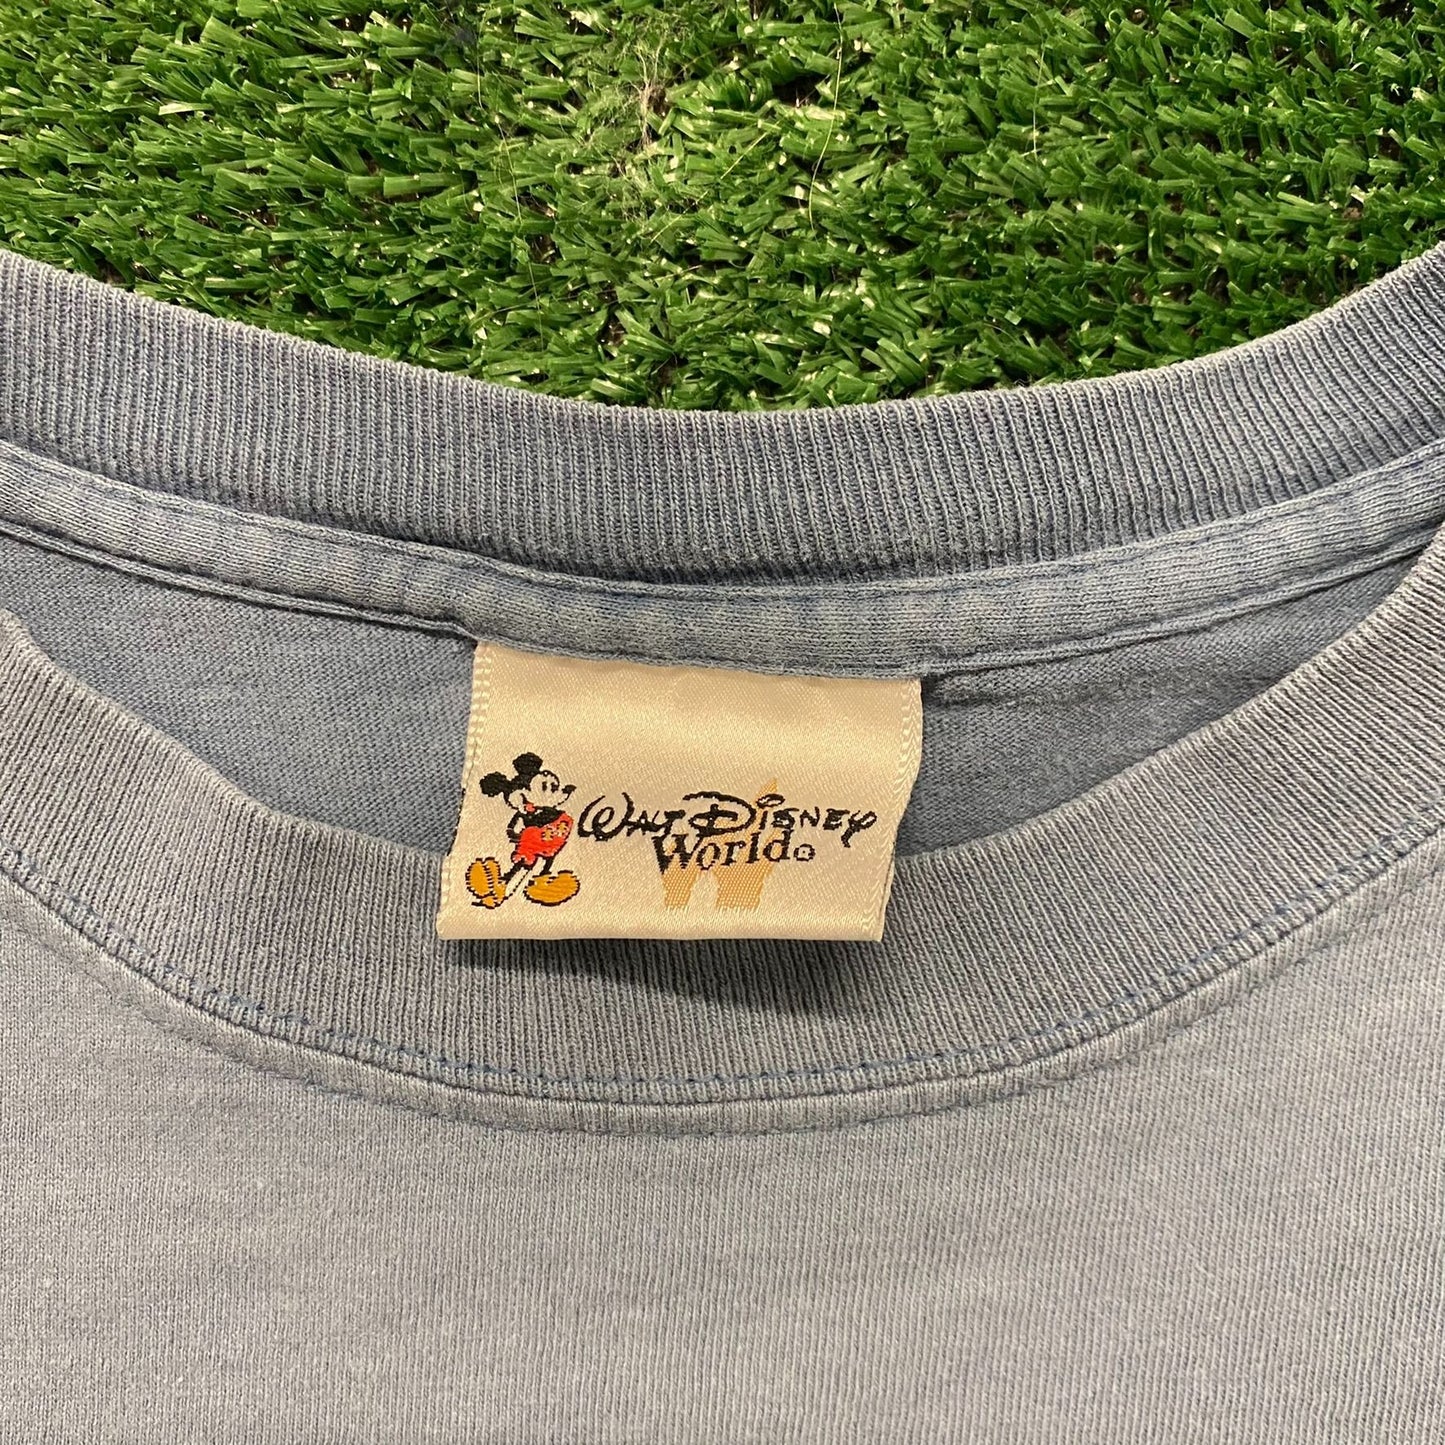 Eeyore Pooh Vintage Disney Cartoon T-Shirt